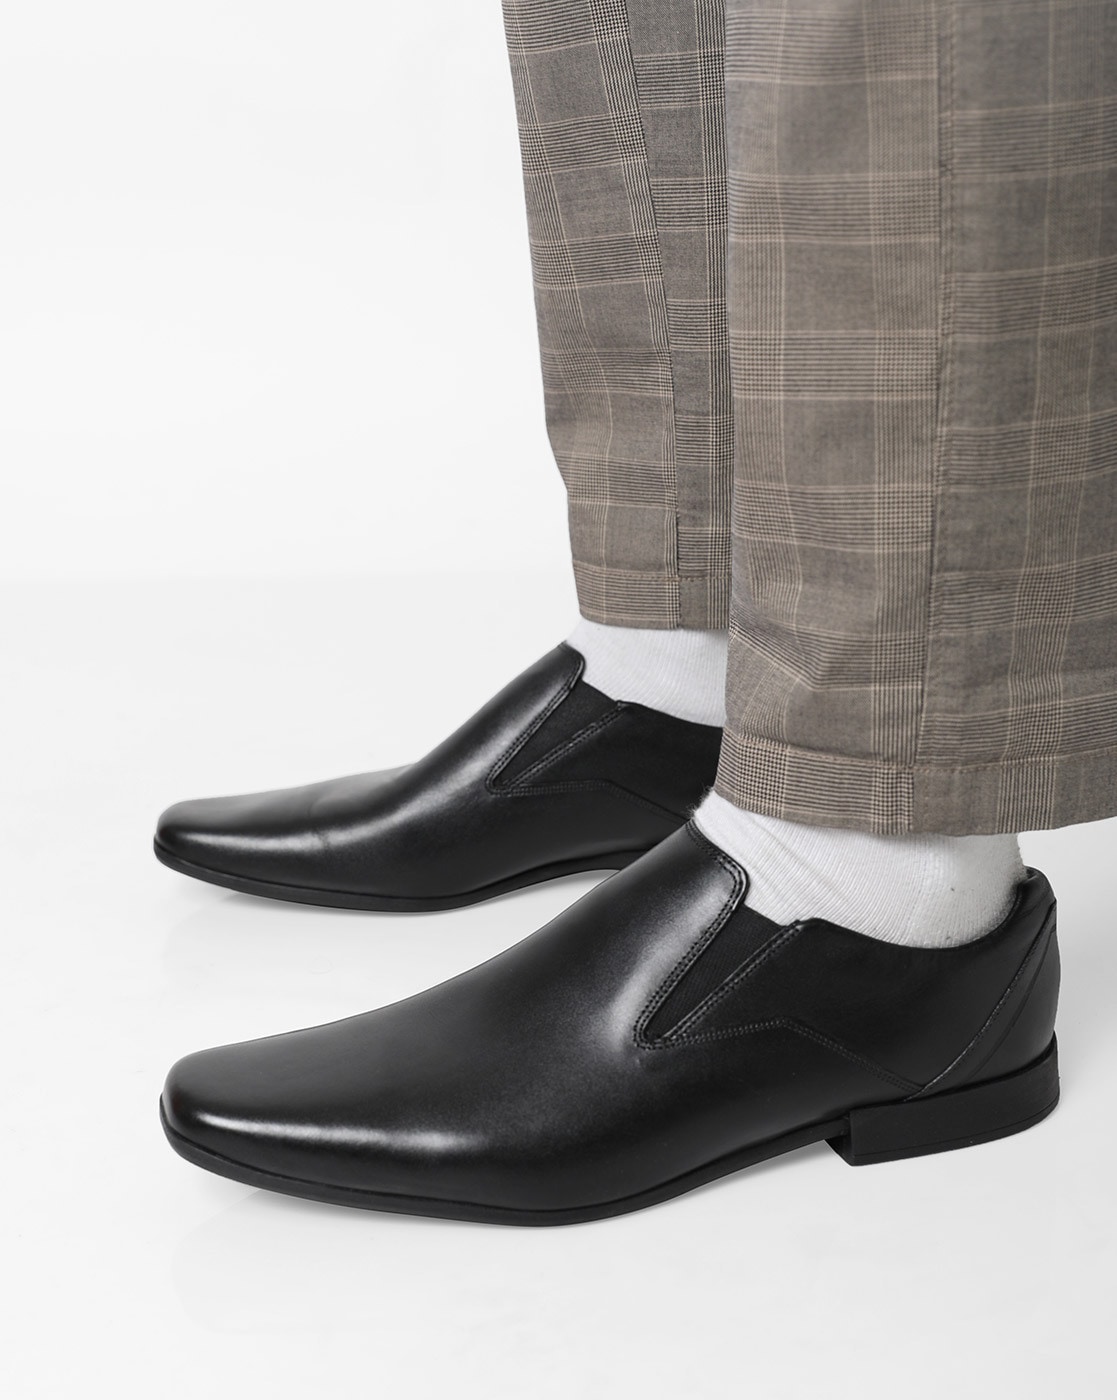 Buy Shoes Men by Online | Ajio.com